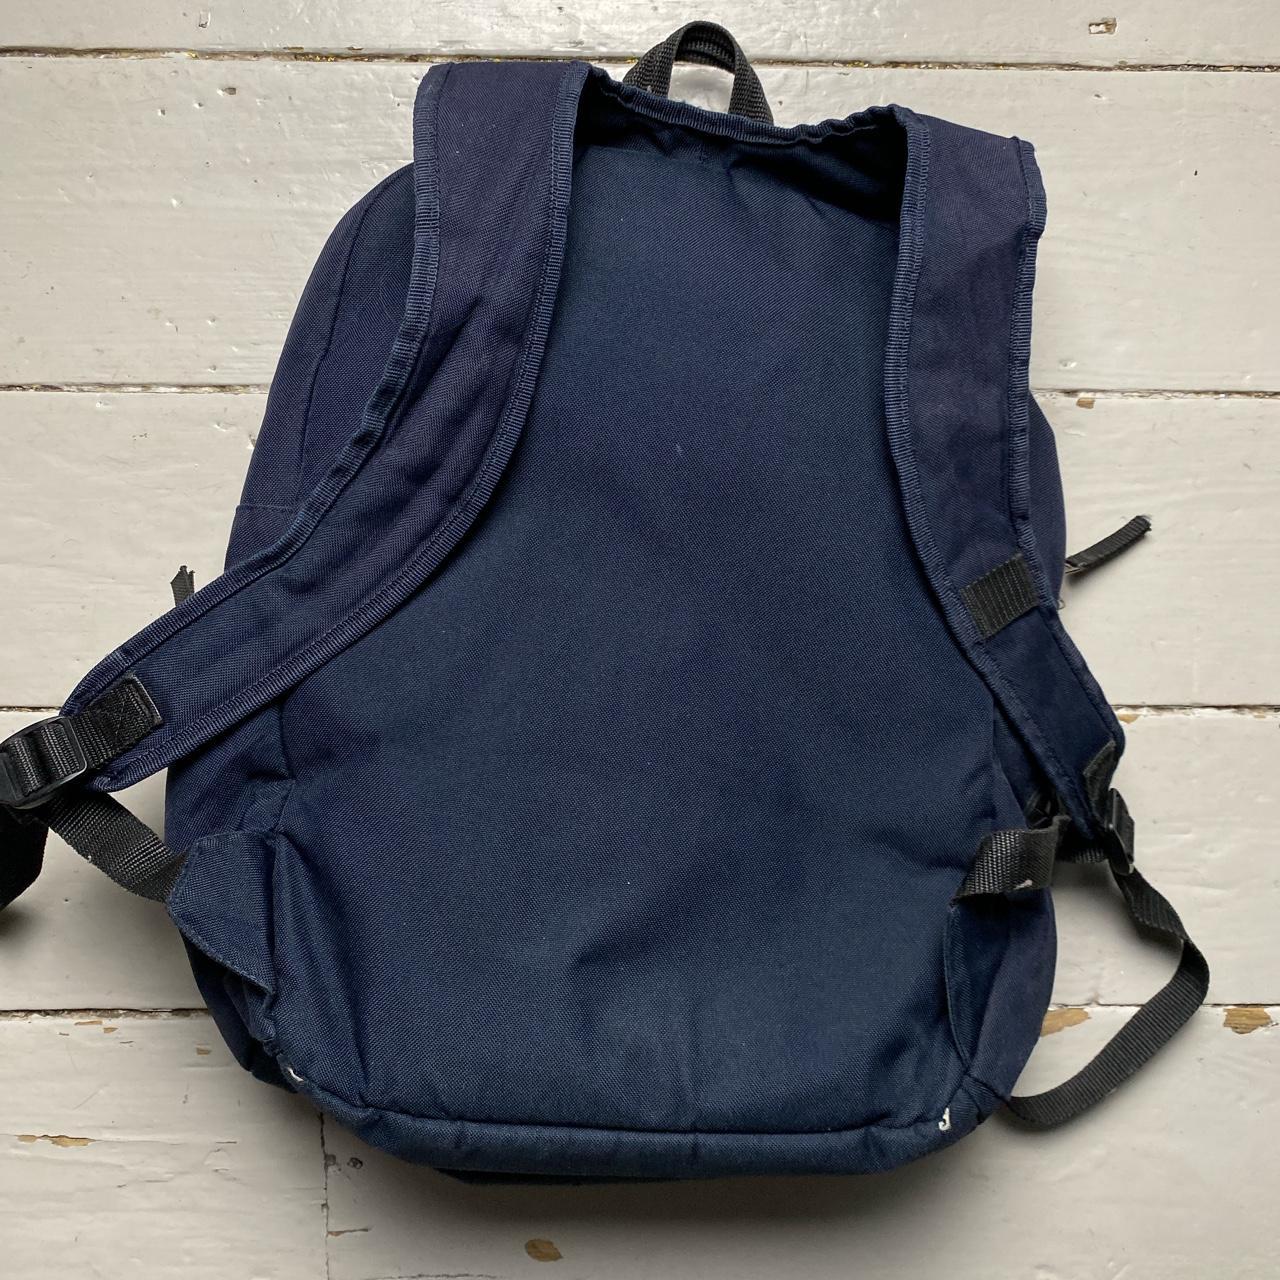 Adidas Blue and White Vintage Rucksack Bag Backpack